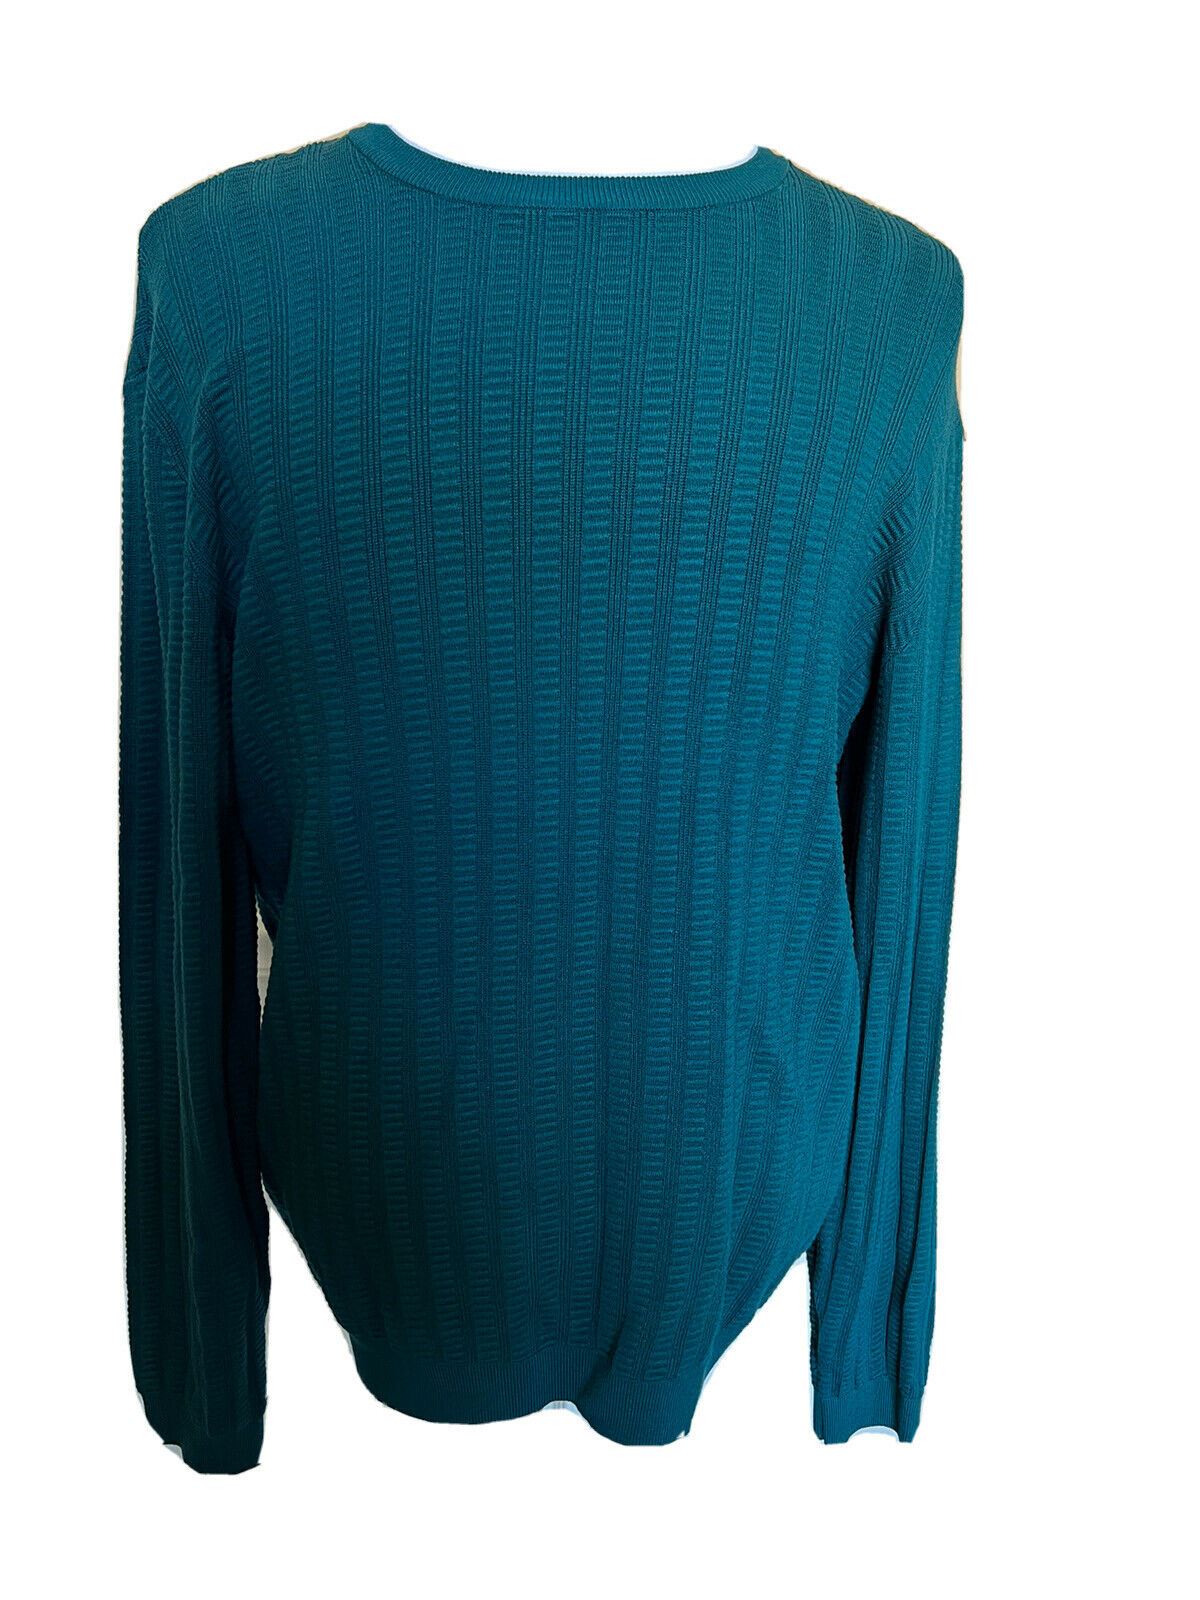 NWT $295 Emporio Armani Crewneck Green Sweater 2XL 3H1MT2